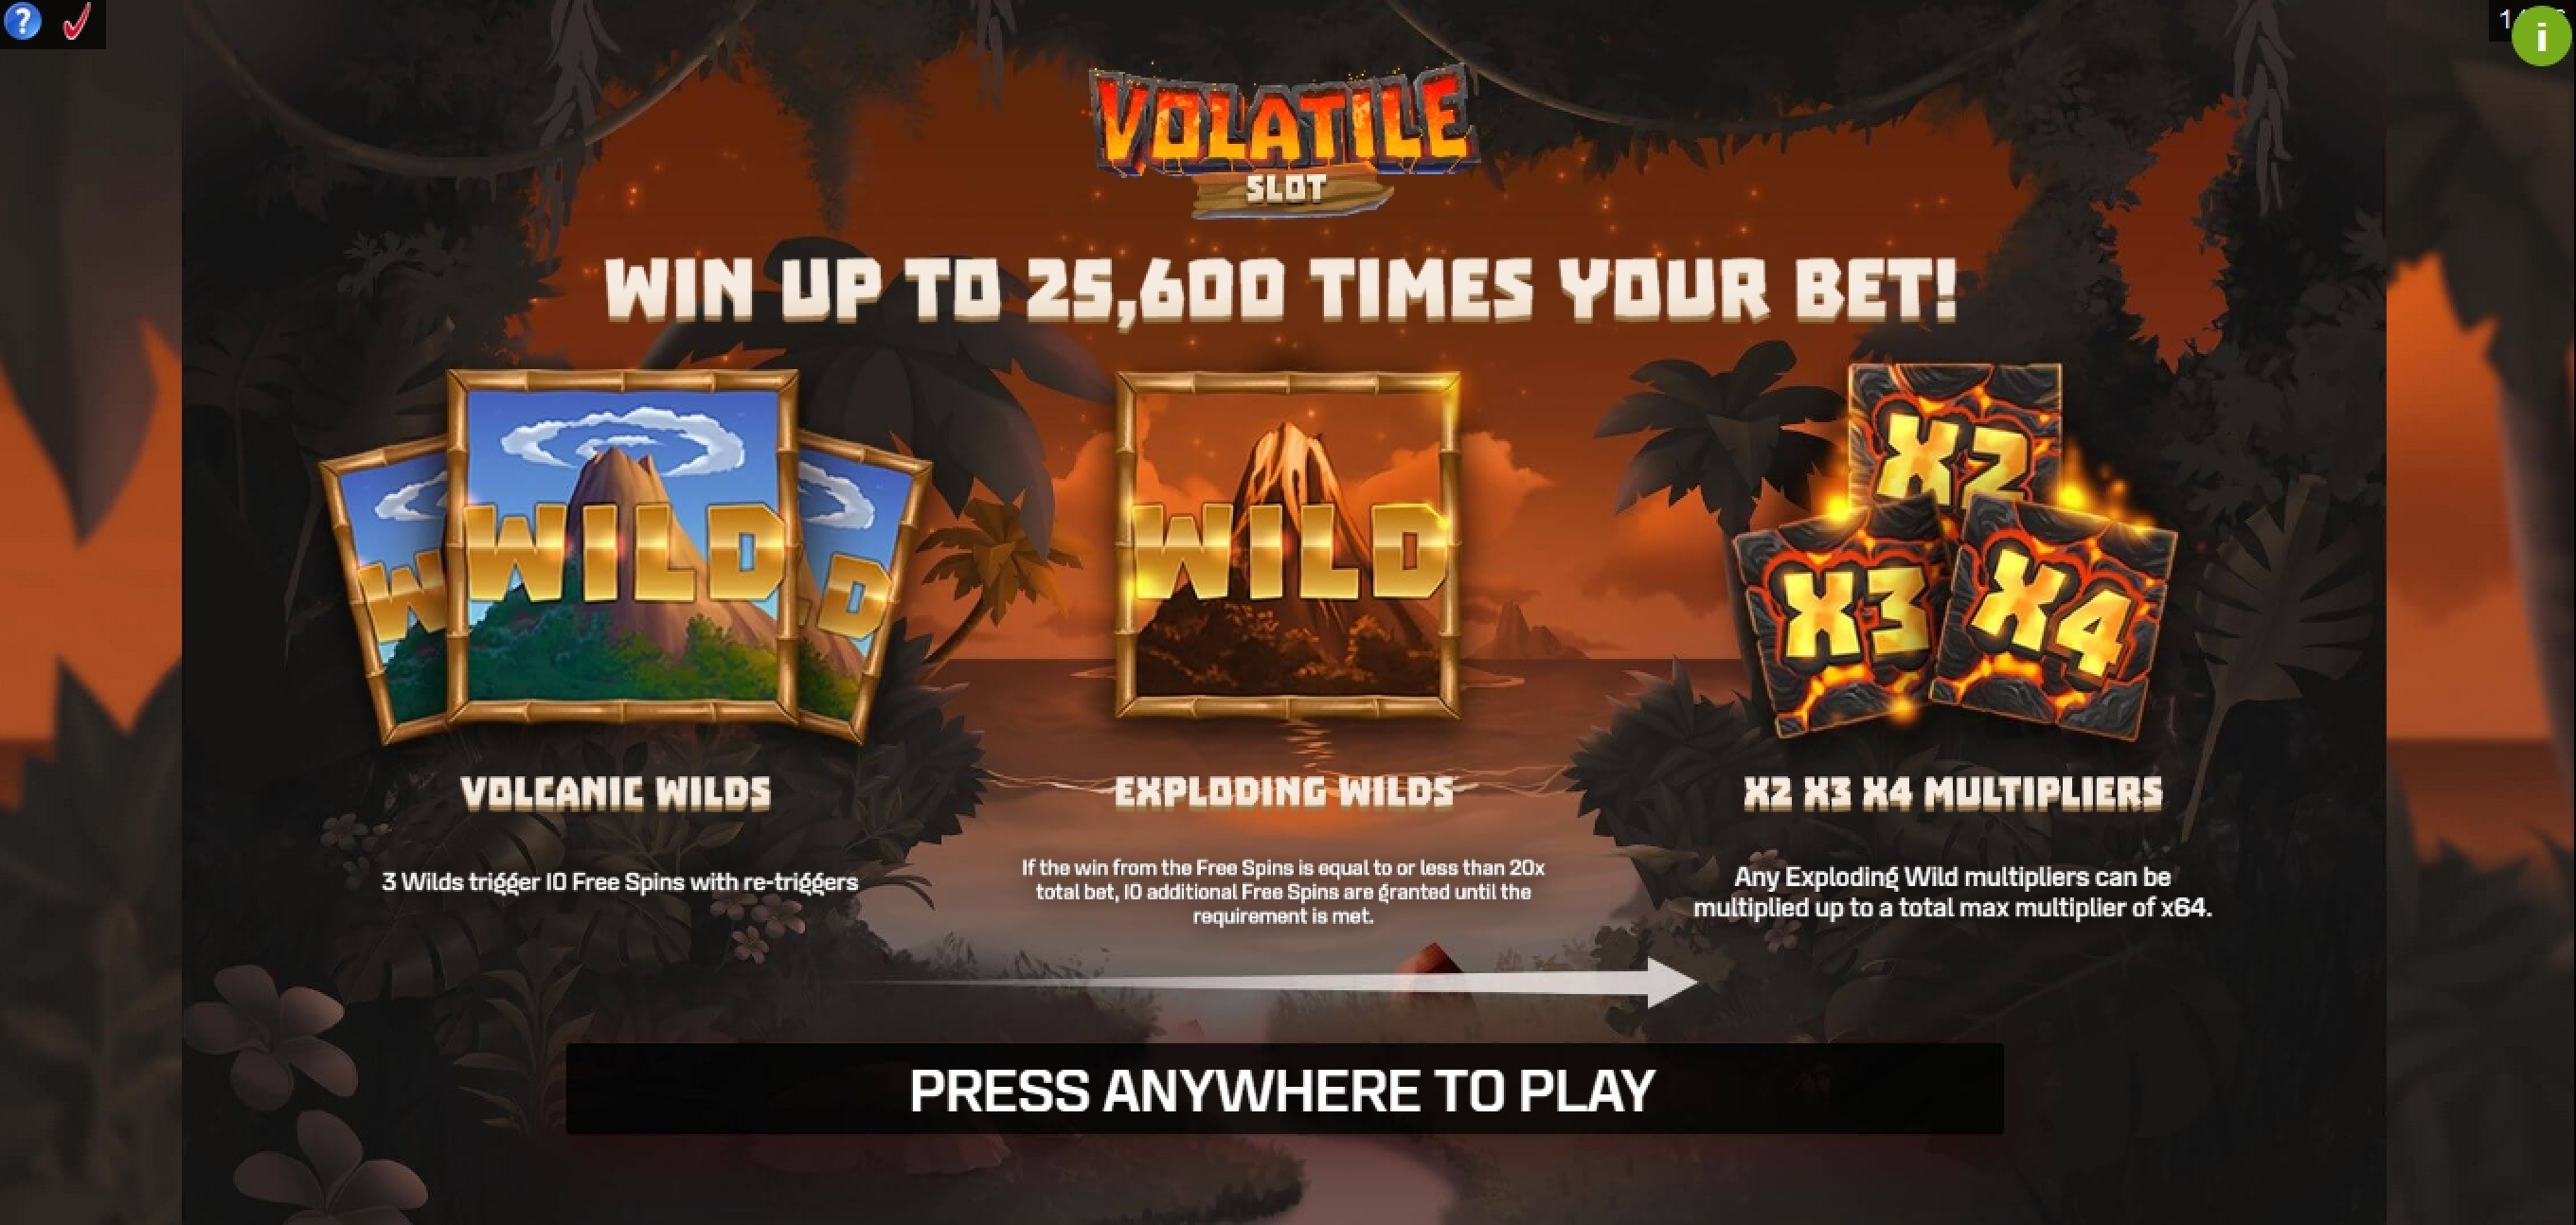 Play Volatile Slot Free Casino Slot Game by Golden Rock Studios